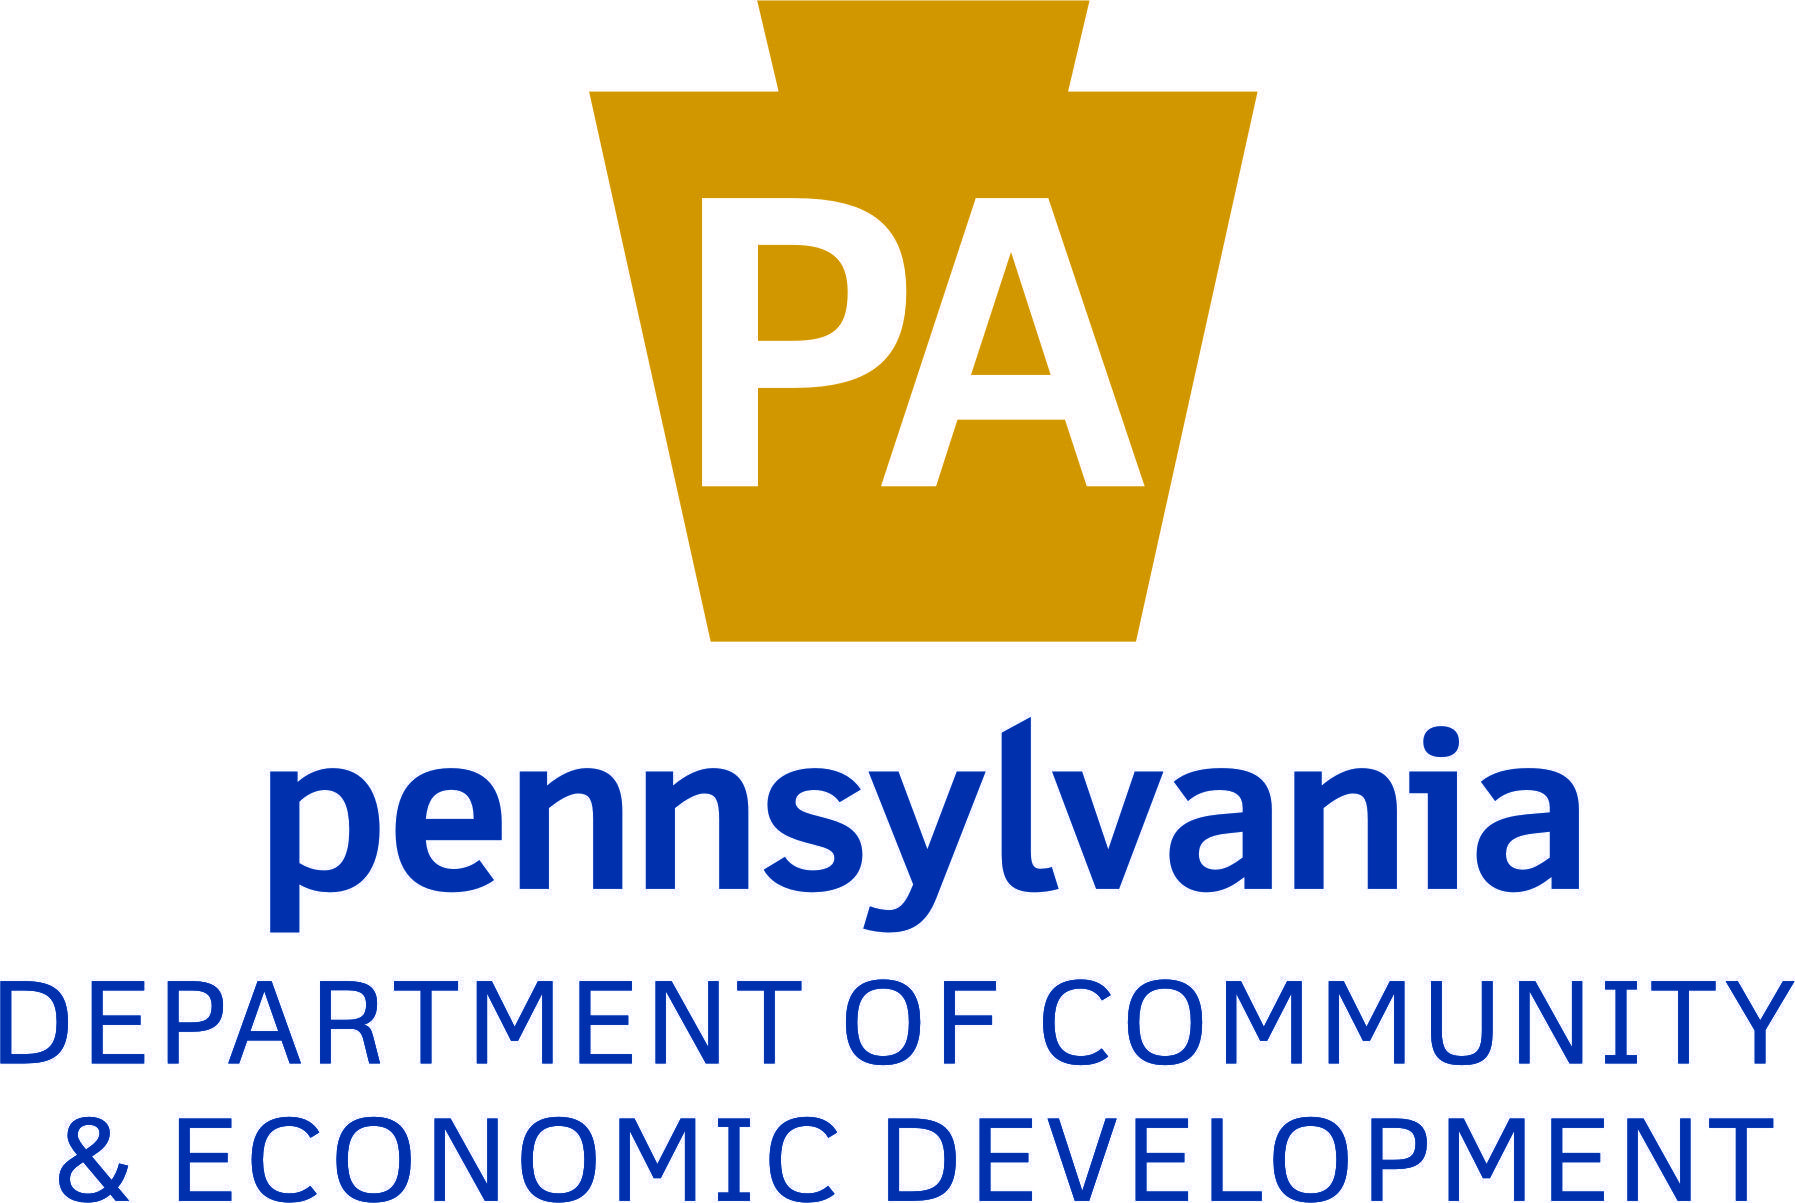 PennDOT Logo - Logo Use Guidelines - PA Department of Community & Economic Development